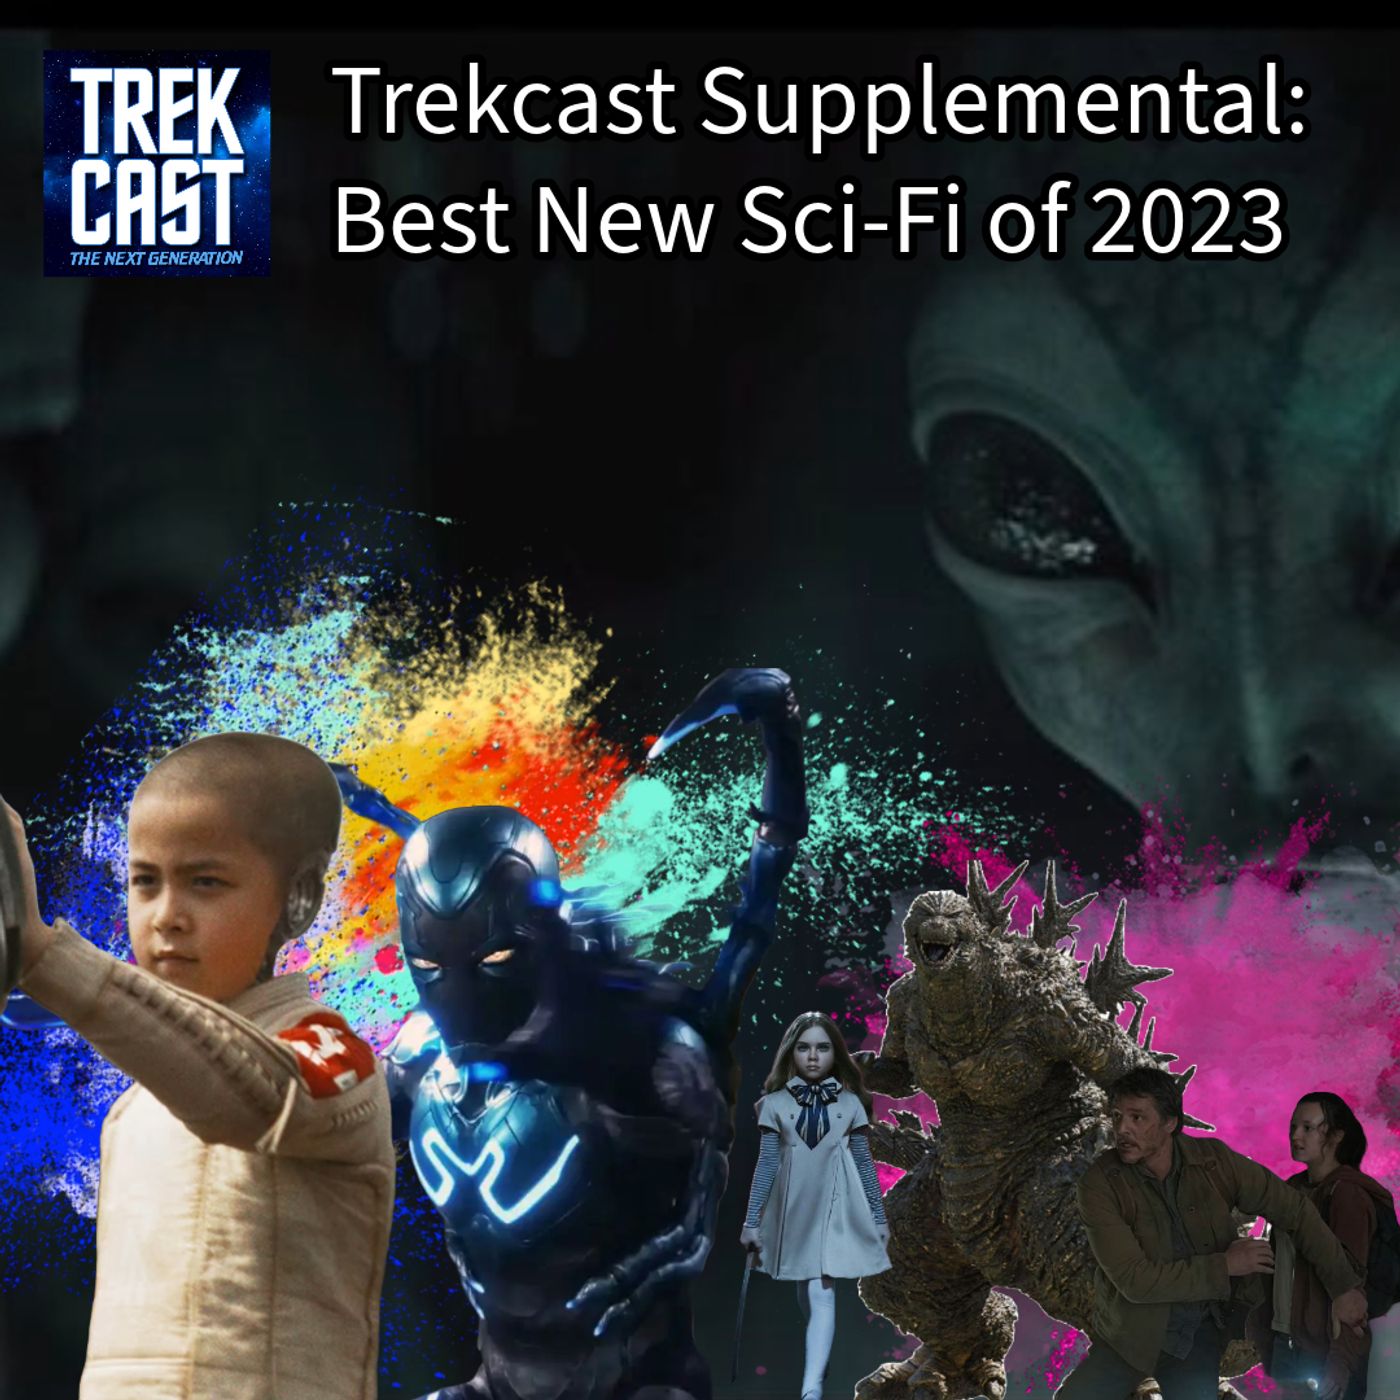 Trekcast Supplemental: Best New Sci-Fi of 2023